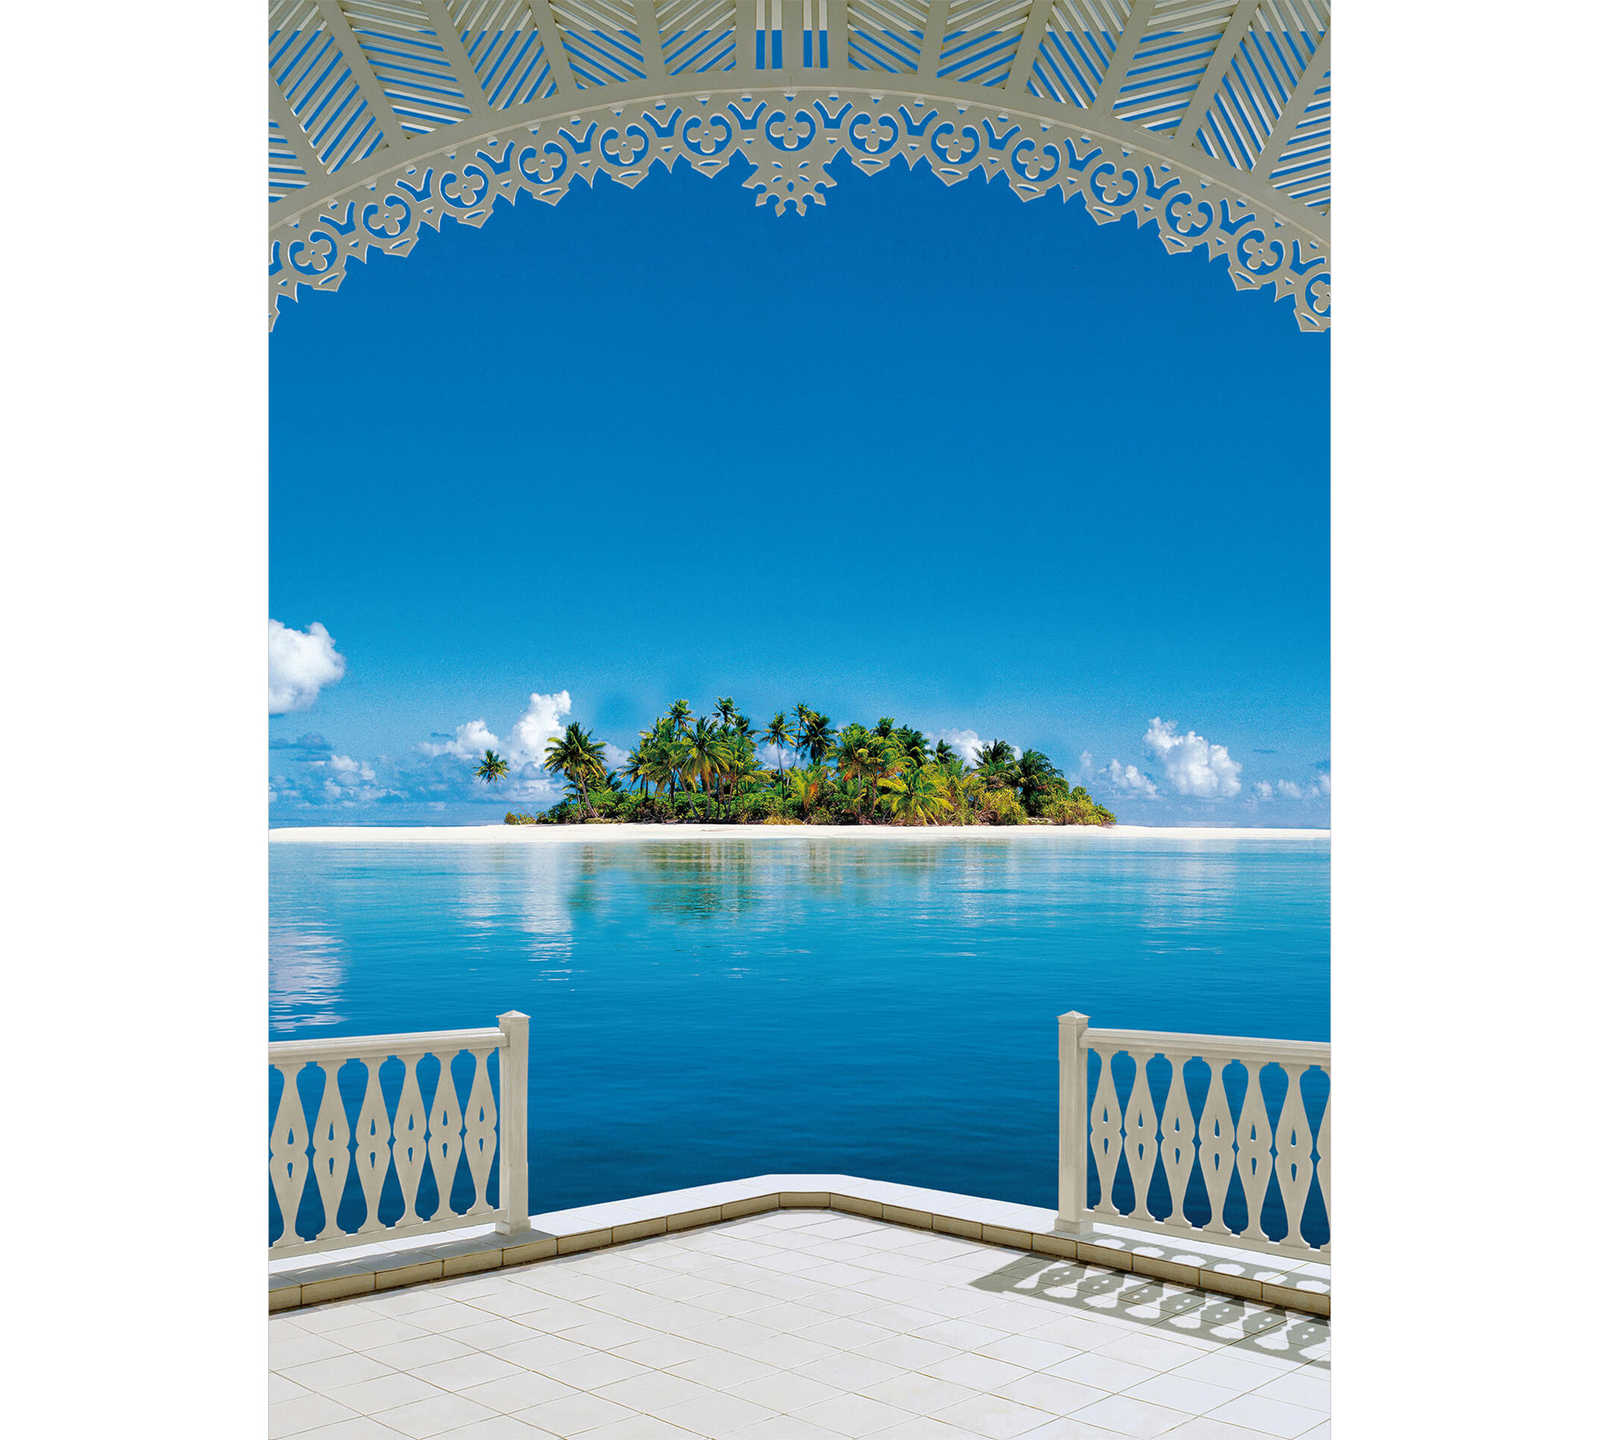         Photo wallpaper tropical island view, portrait format
    